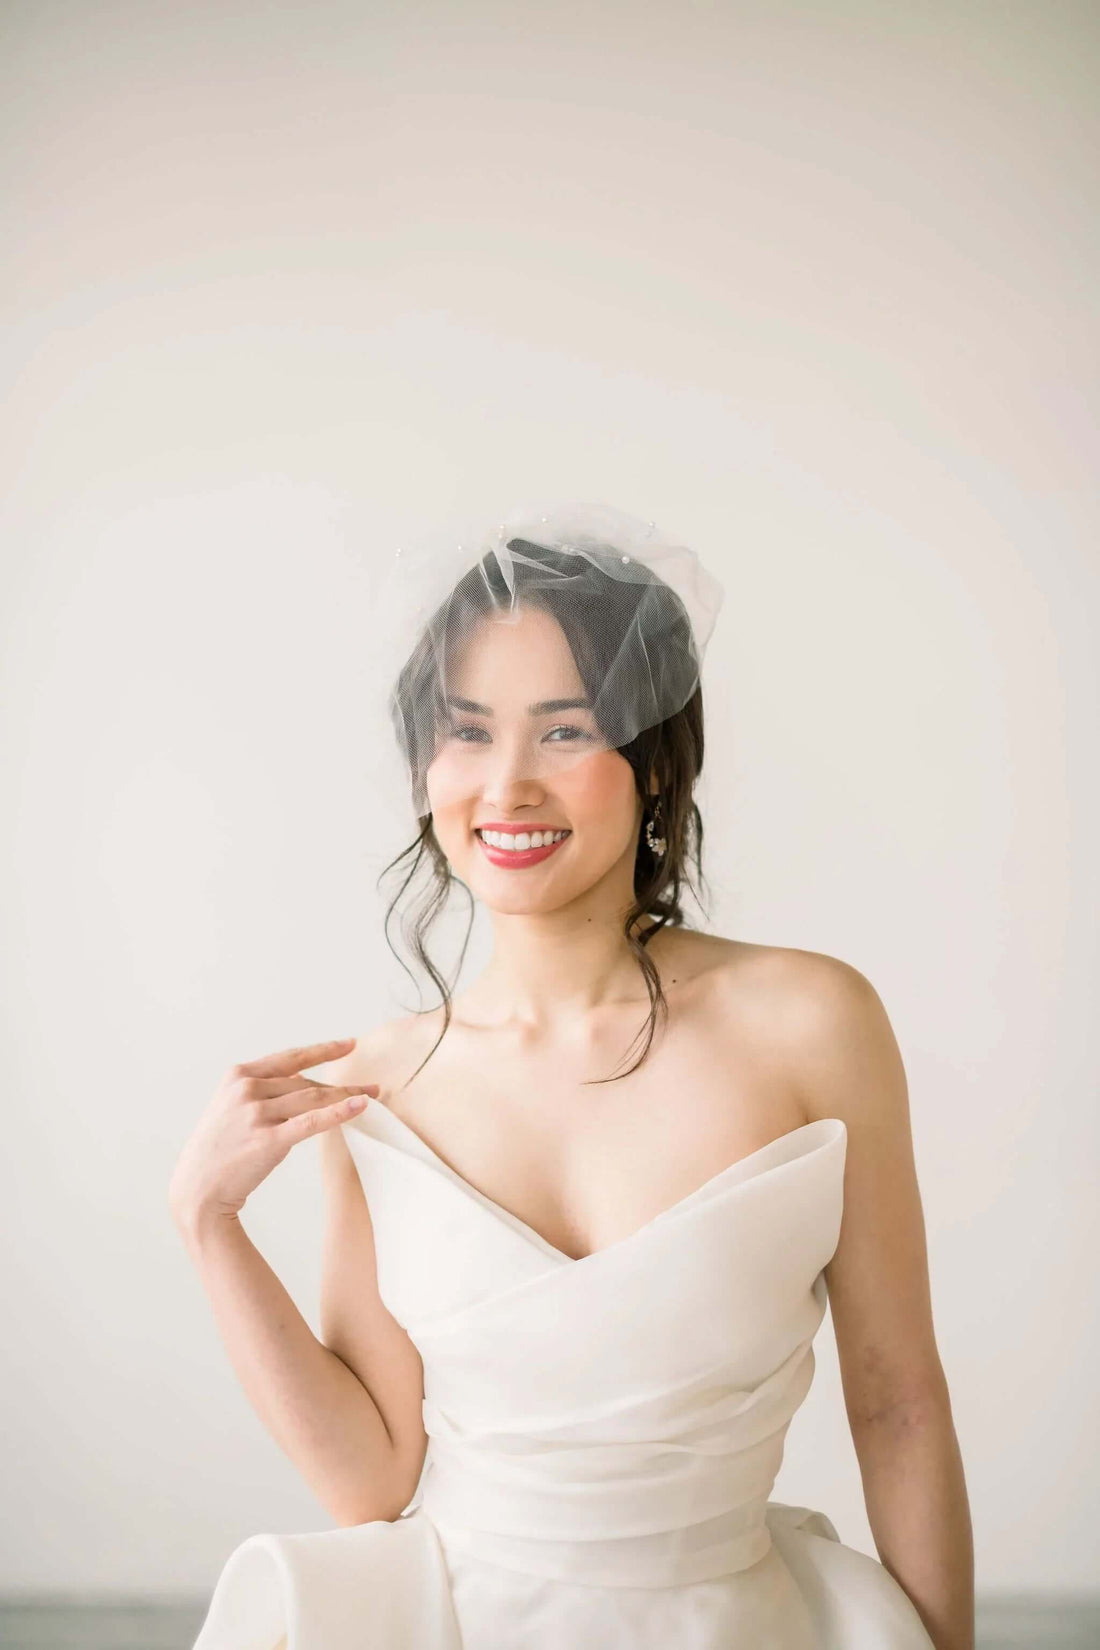 When should I purchase a bridal wedding veil? Tessa Kim